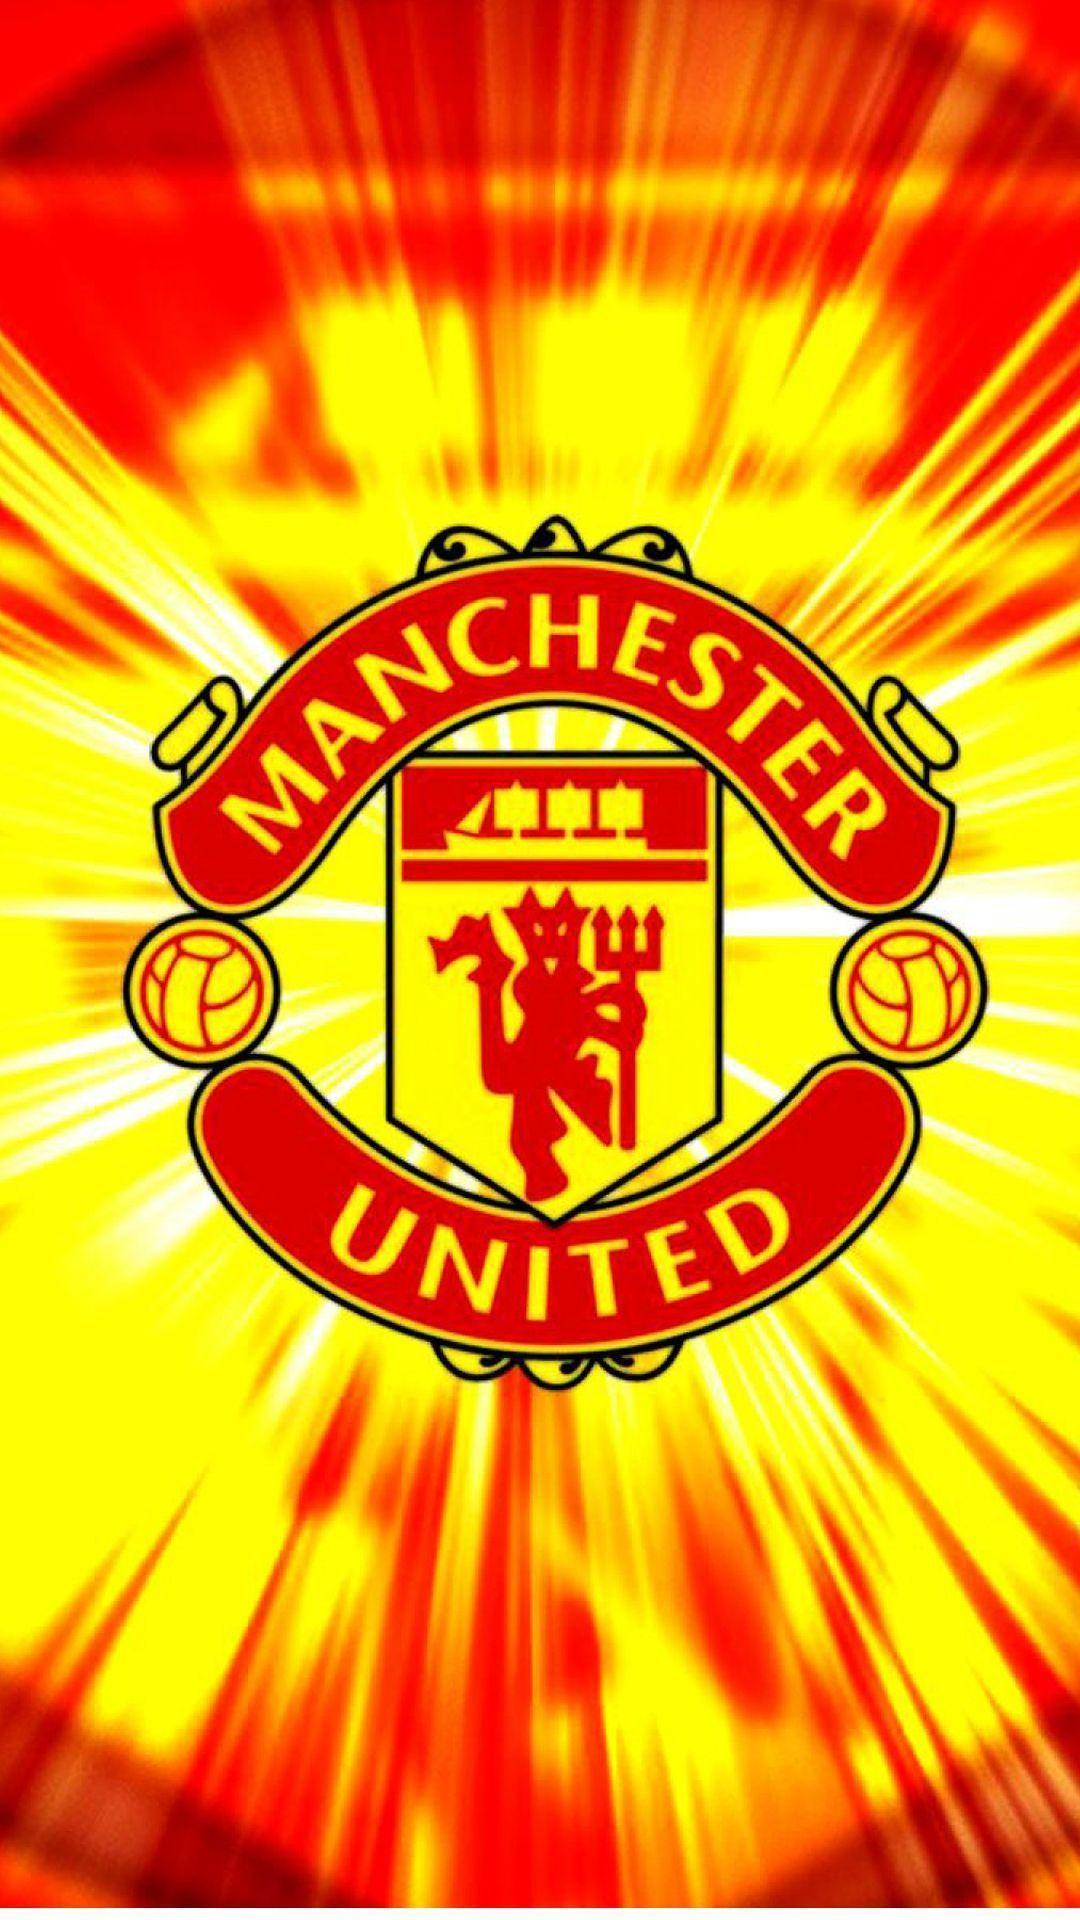 1080 x 1920 · jpeg - Wallpapers Logo Manchester United Terbaru 2017 - Wallpaper Cave